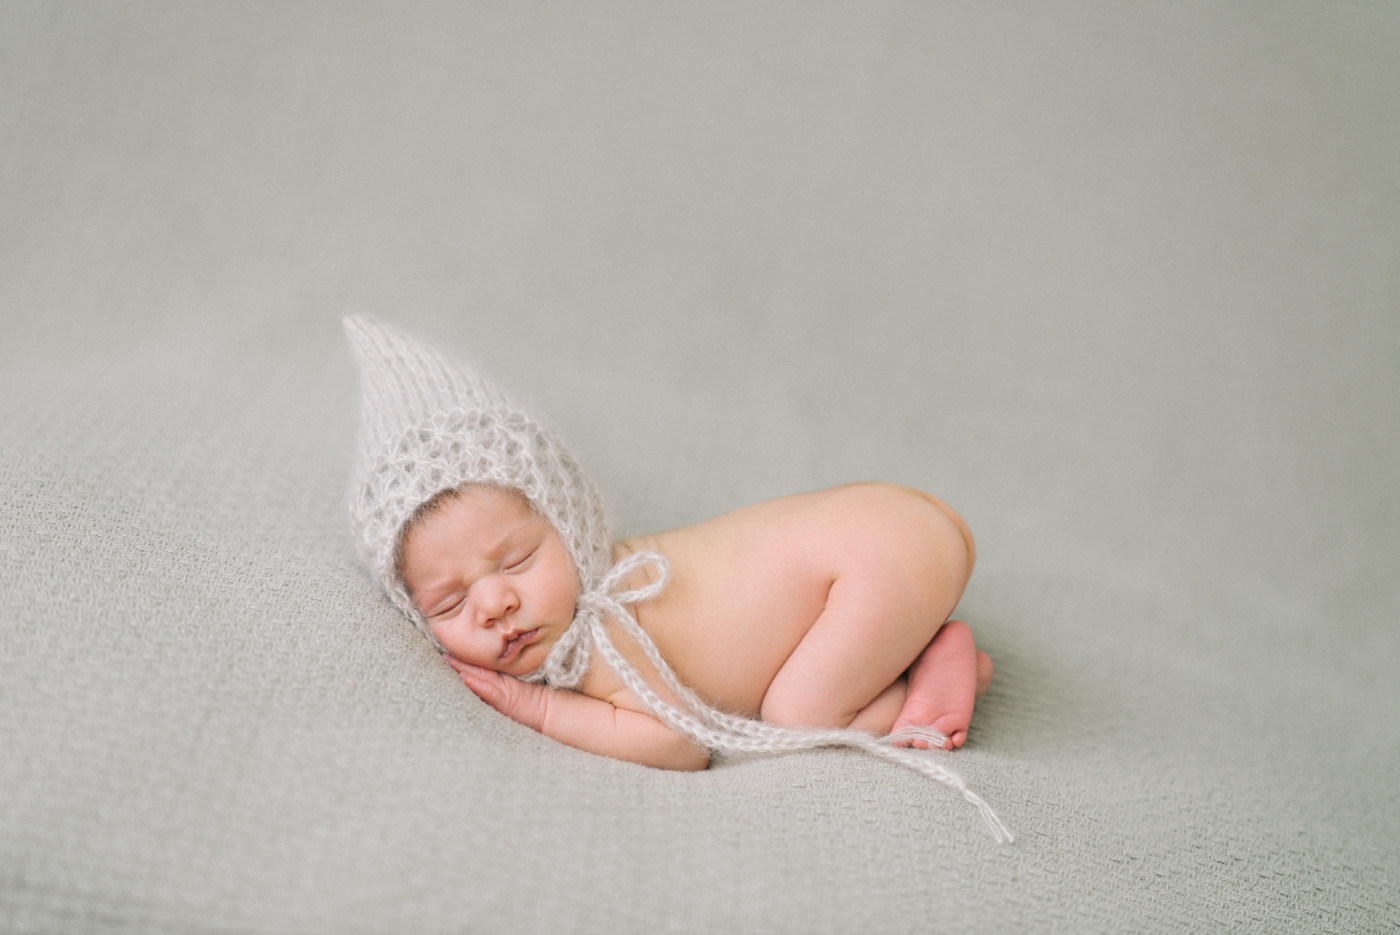 best-newborn-photographer-portland-oregon-shelley-marie-photography-baby-girl-knit-pixie-bonnet-hat-with-bow-076-Edit.jpg